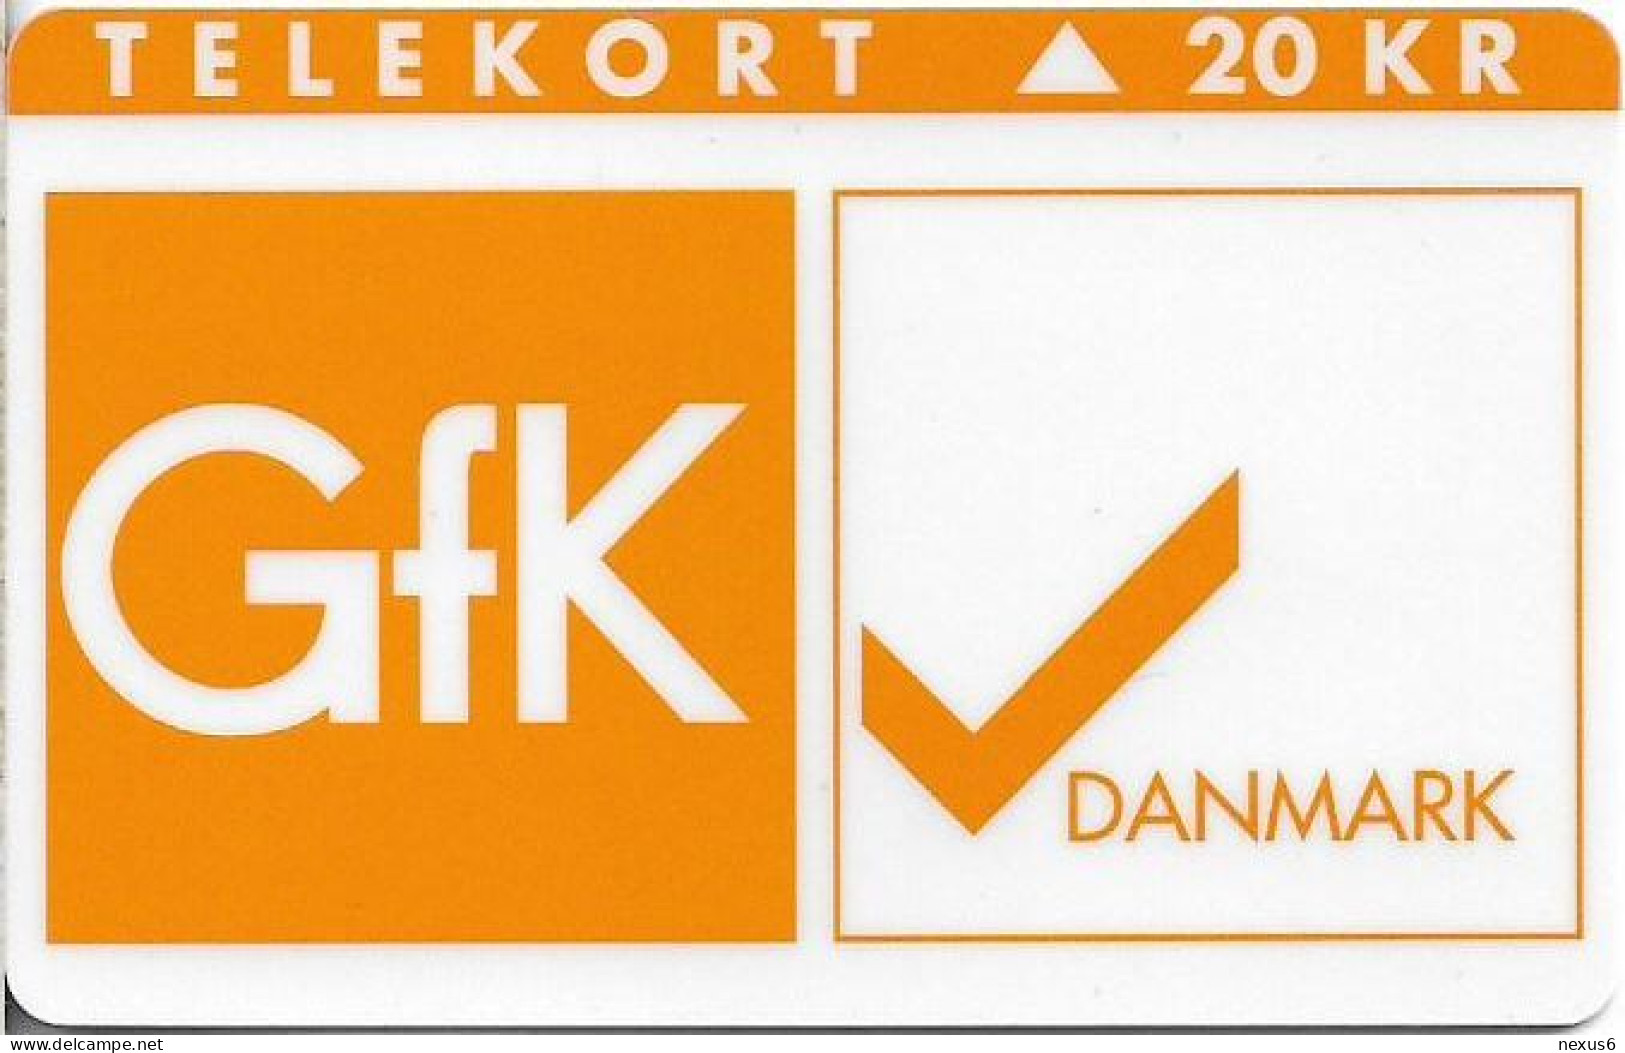 Denmark - KTAS - Gfk Danmark - TDKP134B (Cn. 1050) - 12.1995, 1.300ex, 20kr, Used - Denmark